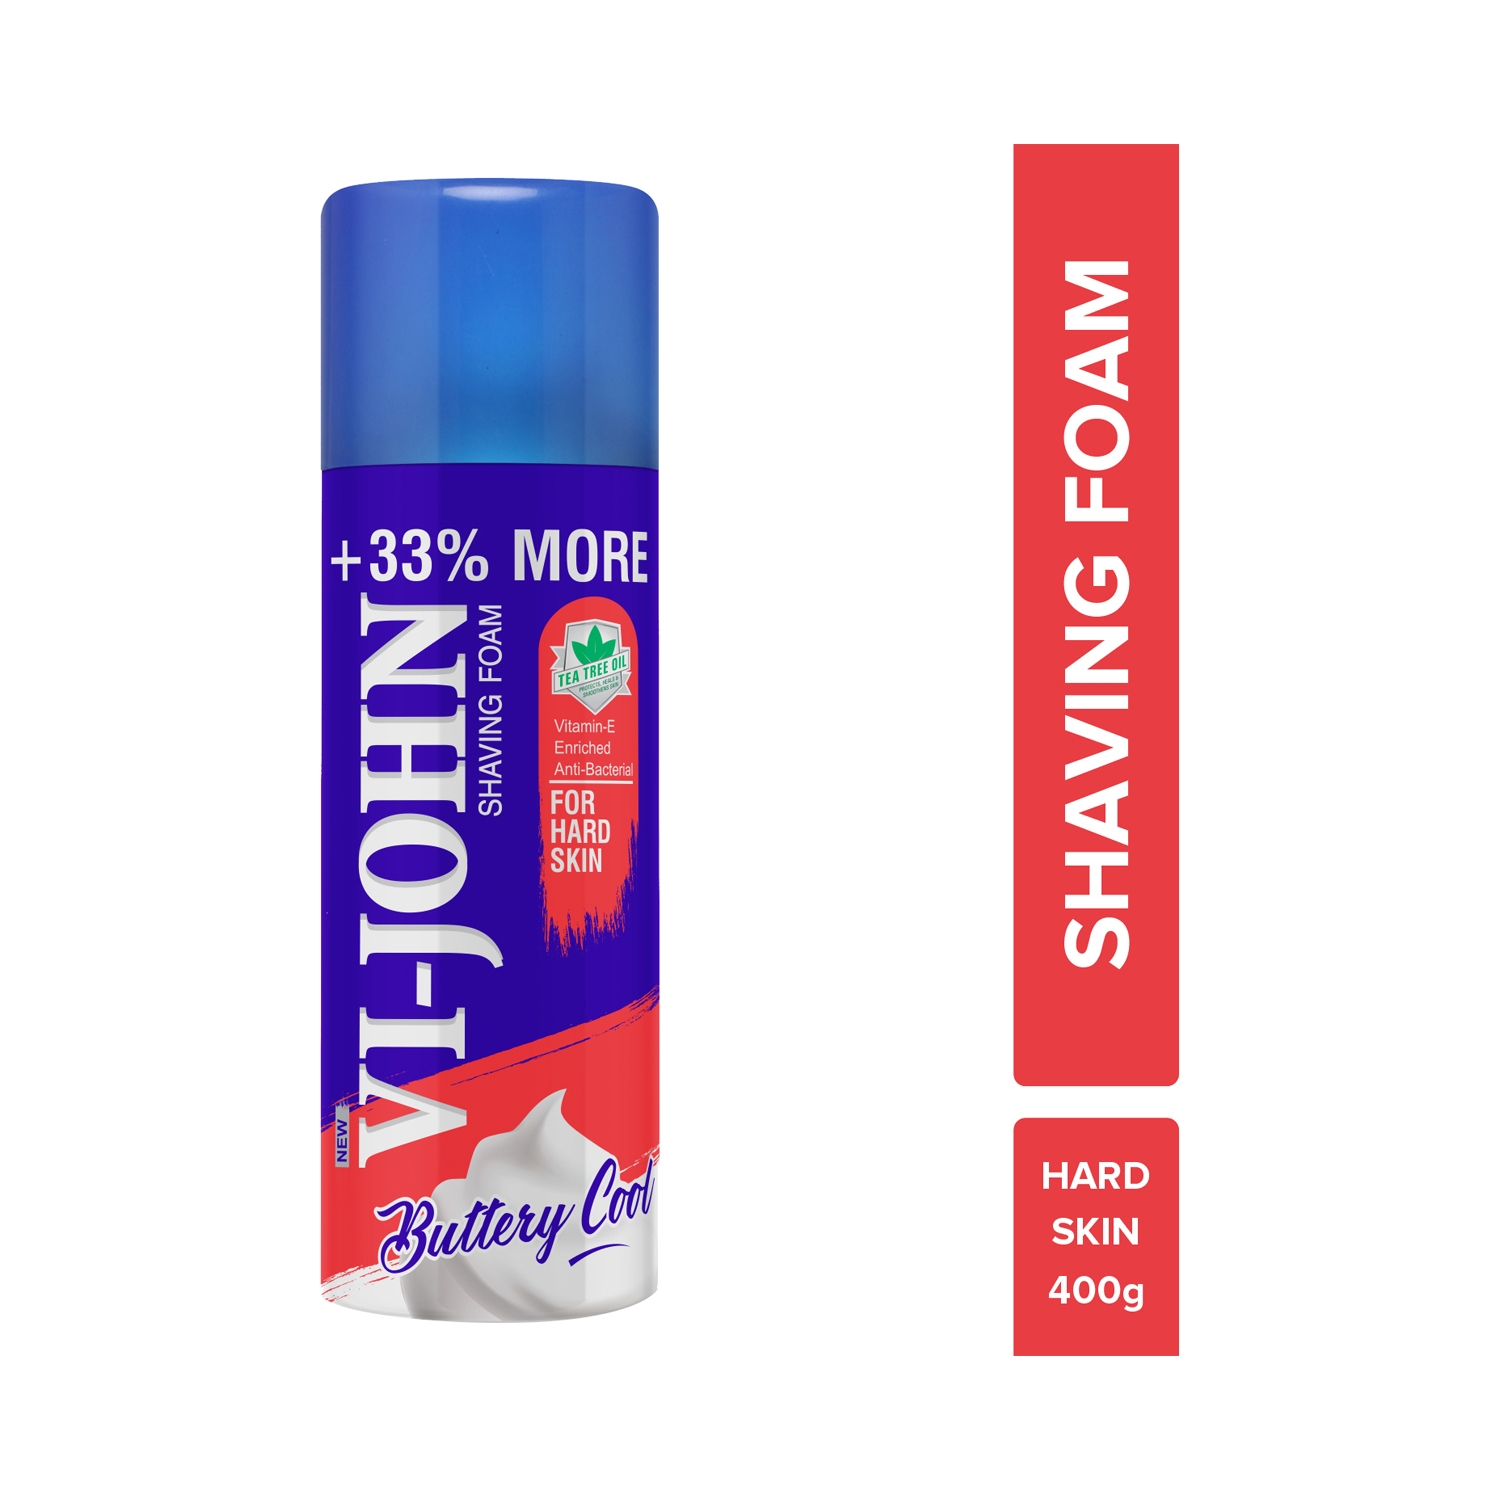 VI-JOHN | VI-JOHN Hard Skin Shaving Foam Vitamin E Enriched & Antibacterial Properties (400g)